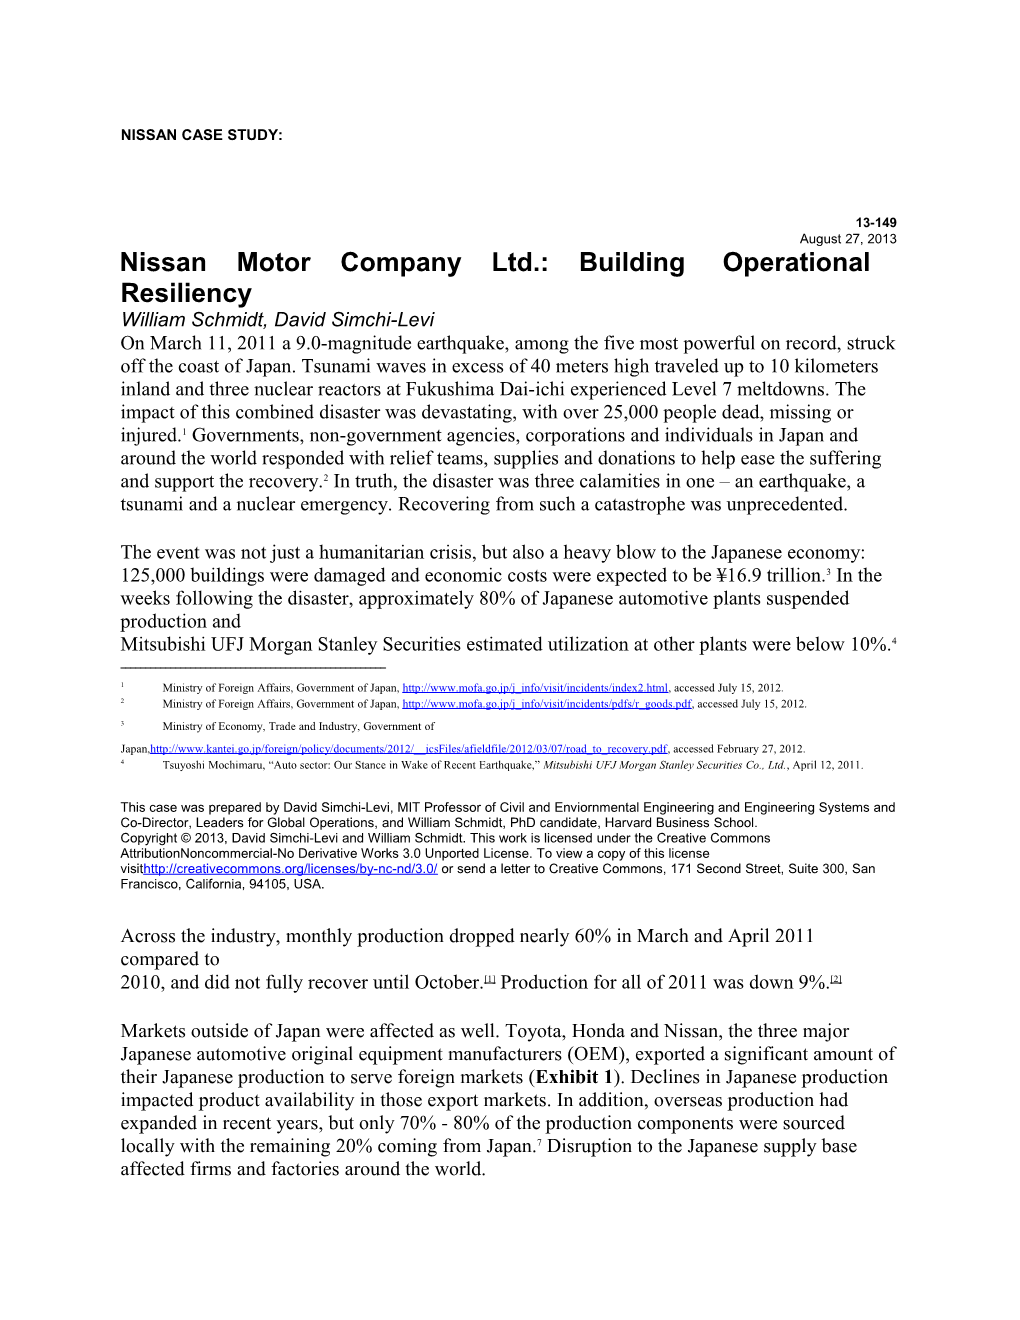 Nissan Motor Company Ltd.: Building Operational